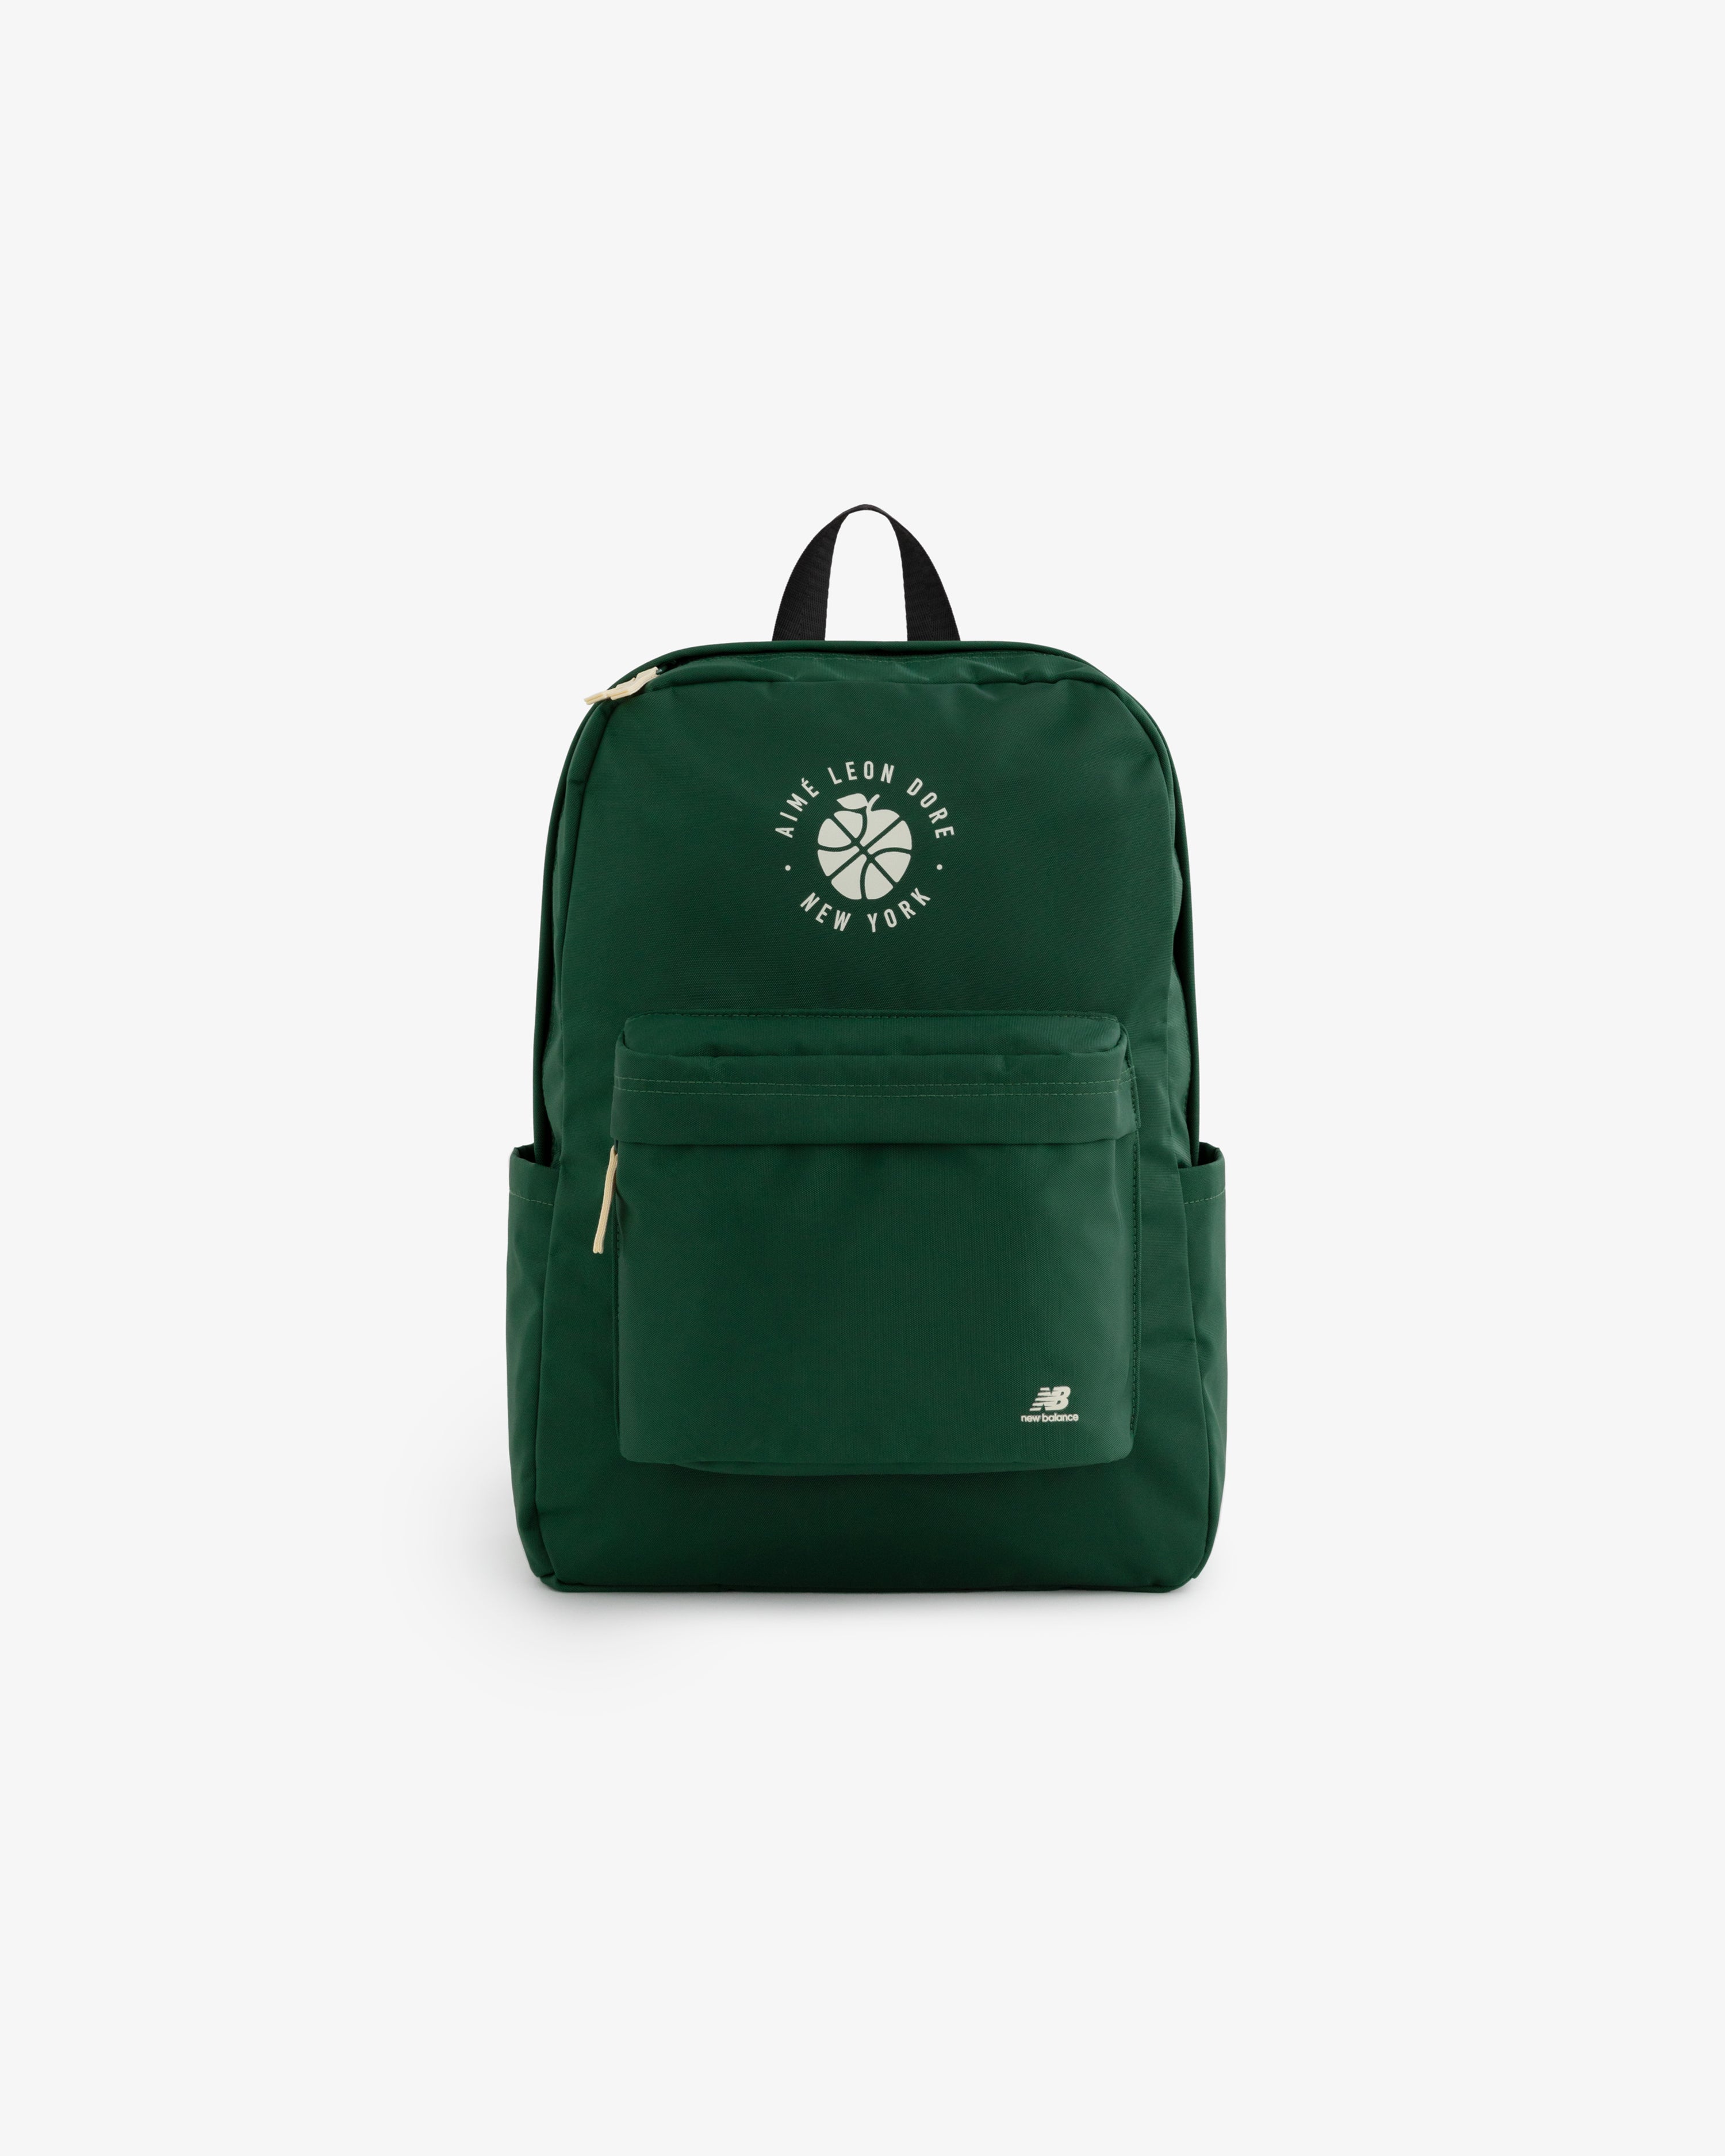 ALD / New Balance SONNY NY Backpack